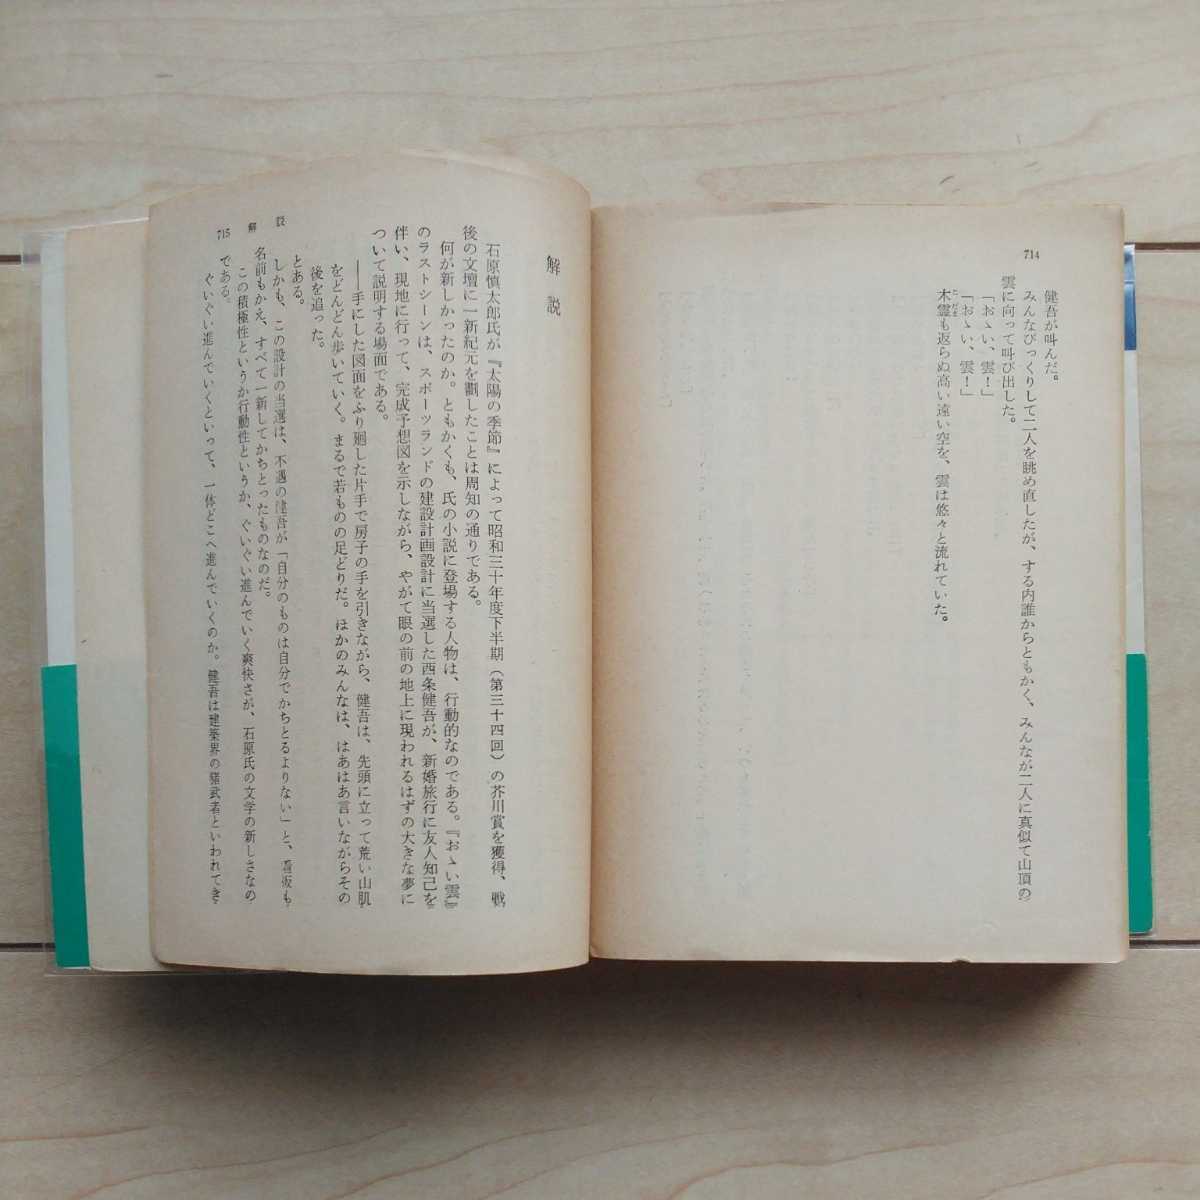 #[....] Ishihara Shintaro работа. Showa 46 год no. 11 версия покрытие с лентой. Kadokawa Bunko.NHK телевизор ..# подробно на фото описание документ . прочитайте пожалуйста.